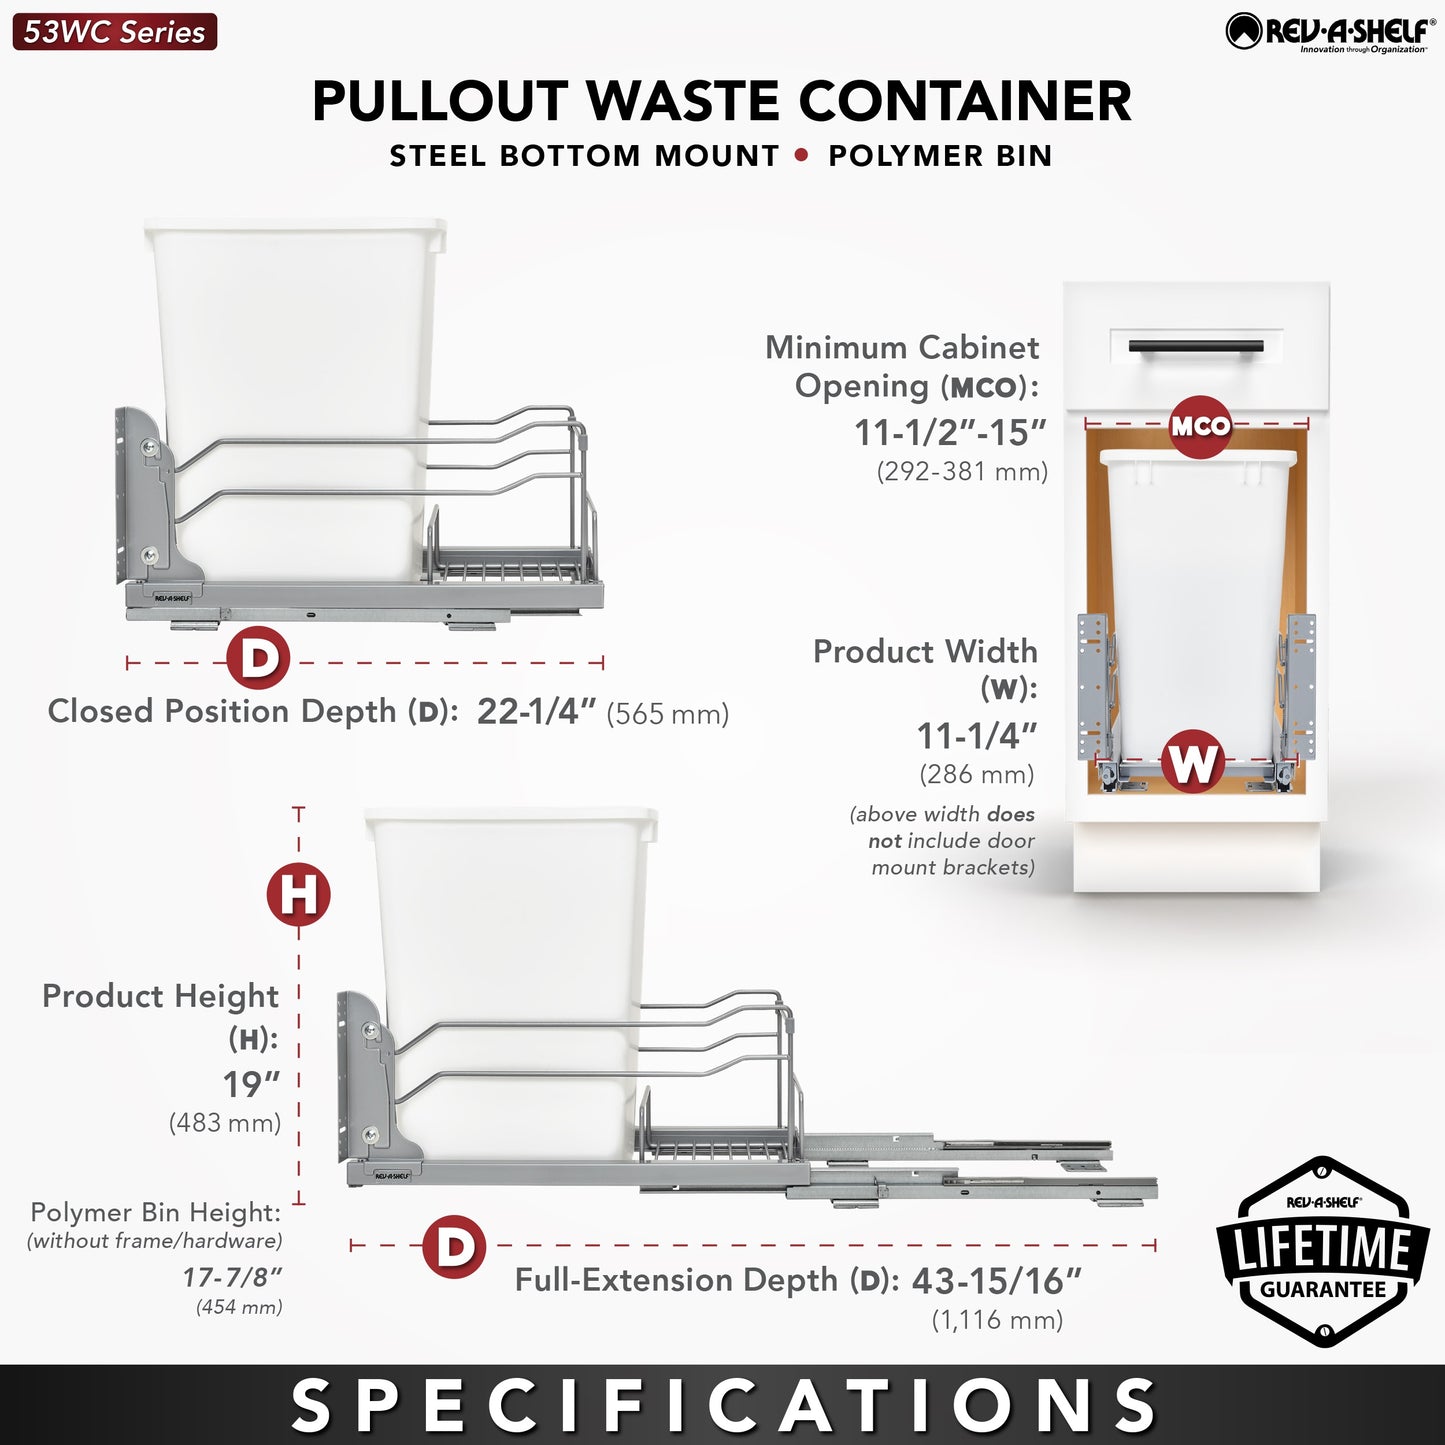 Rev-A-Shelf 35 Quart Pull-Out Waste Container Soft-Close 53WC-1535SCDM-117